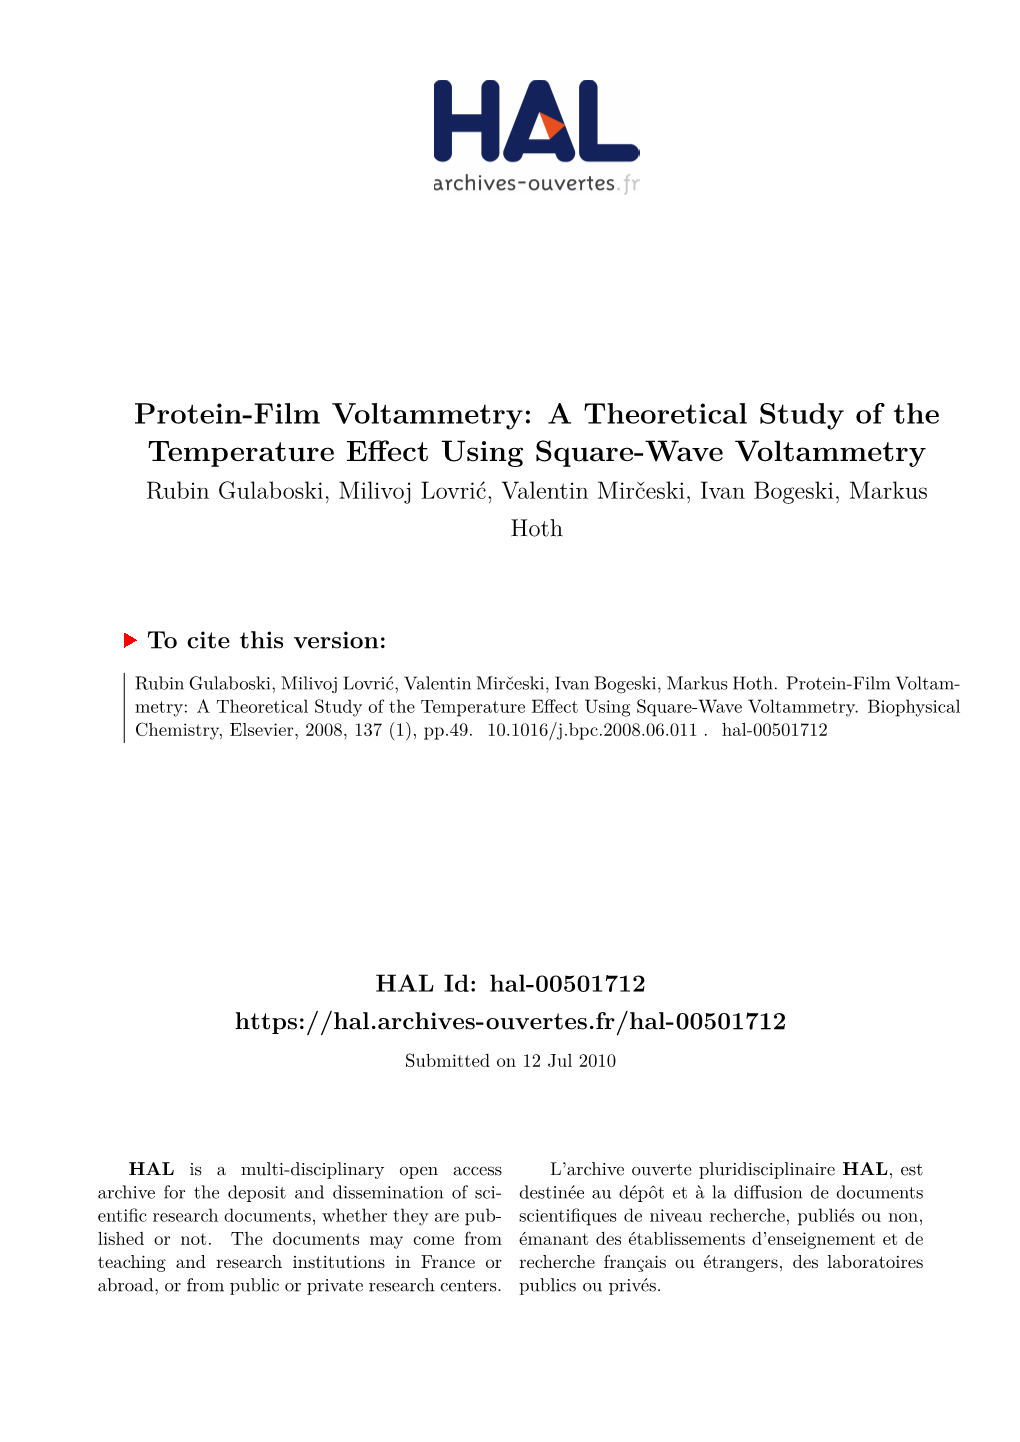 A Theoretical Study of the Temperature Effect Using Square-Wave Voltammetry Rubin Gulaboski, Milivoj Lovrić, Valentin Mirčeski, Ivan Bogeski, Markus Hoth